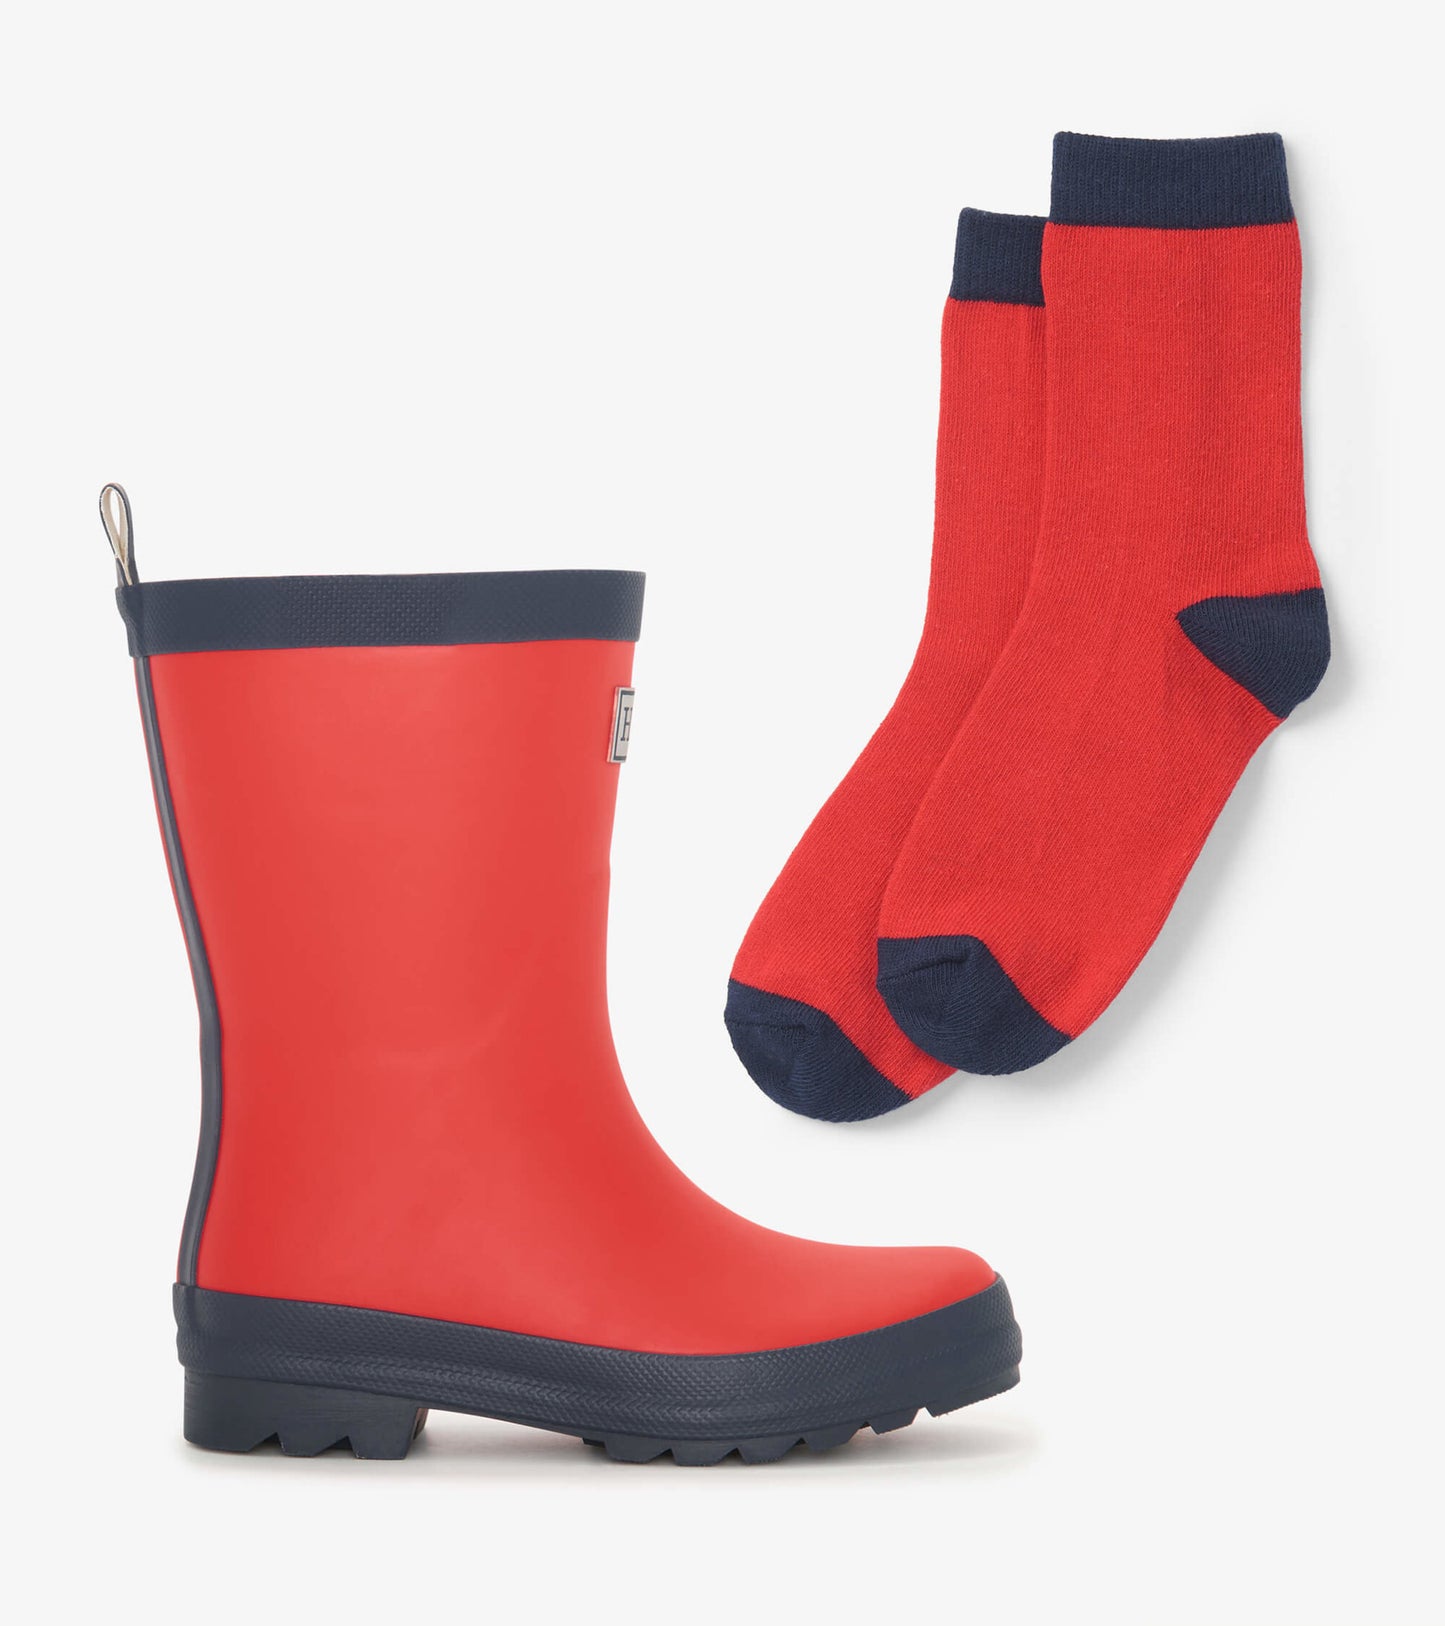 Hatley Navy & Red Matte Rain Boots w/Matching Socks